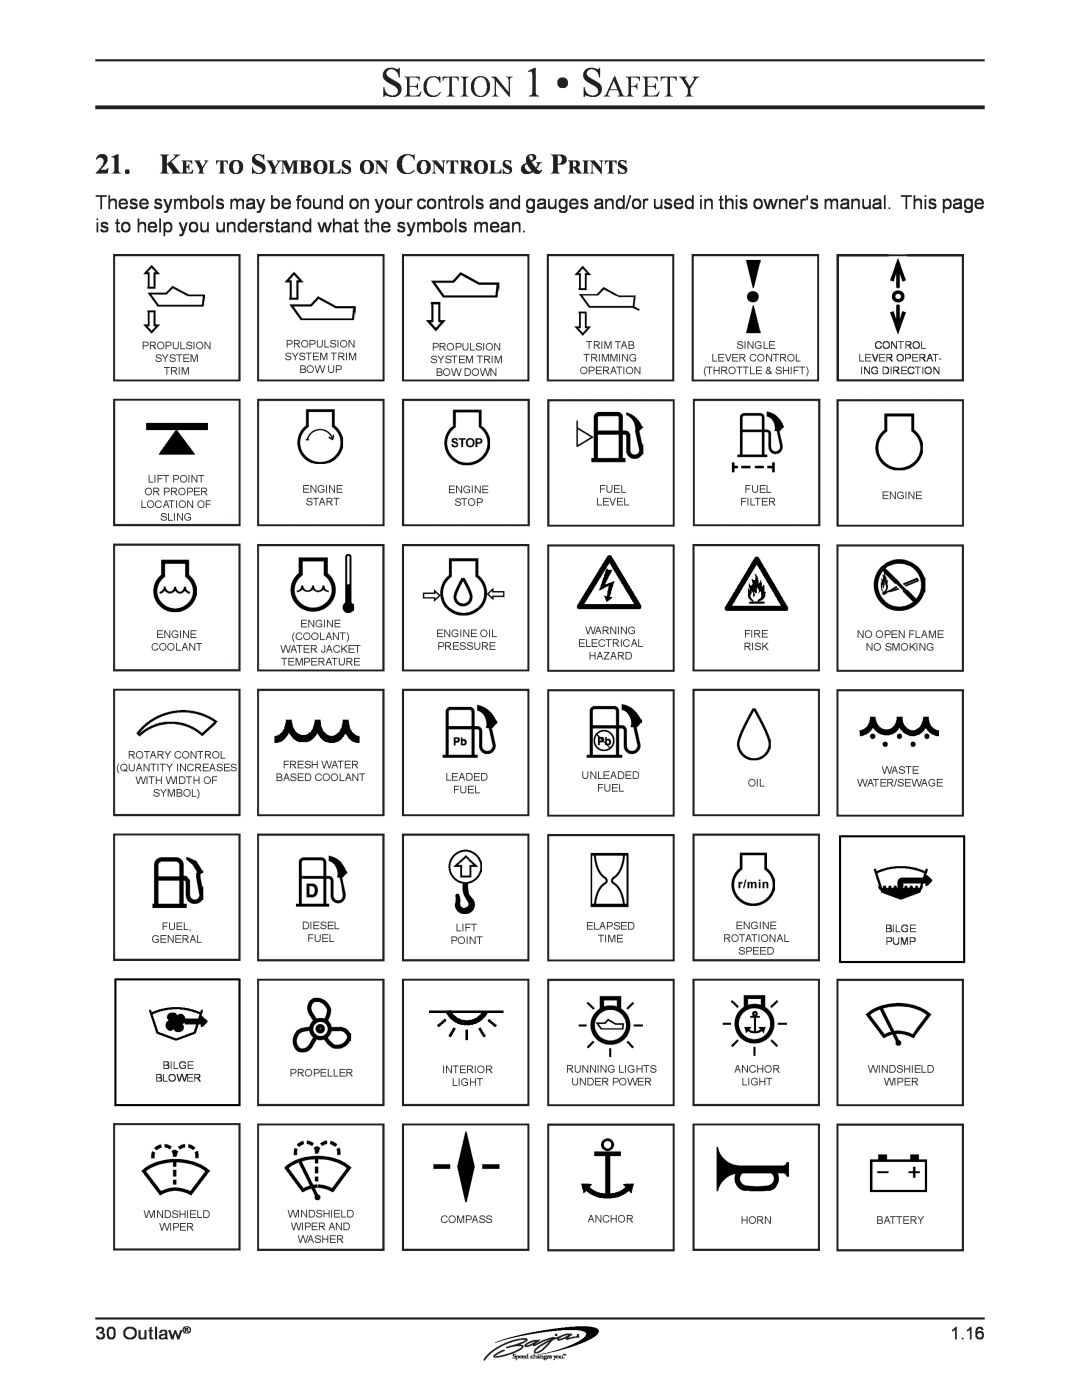 Baja Marine 30 manual Safety, Key to Symbols on Controls & Prints 